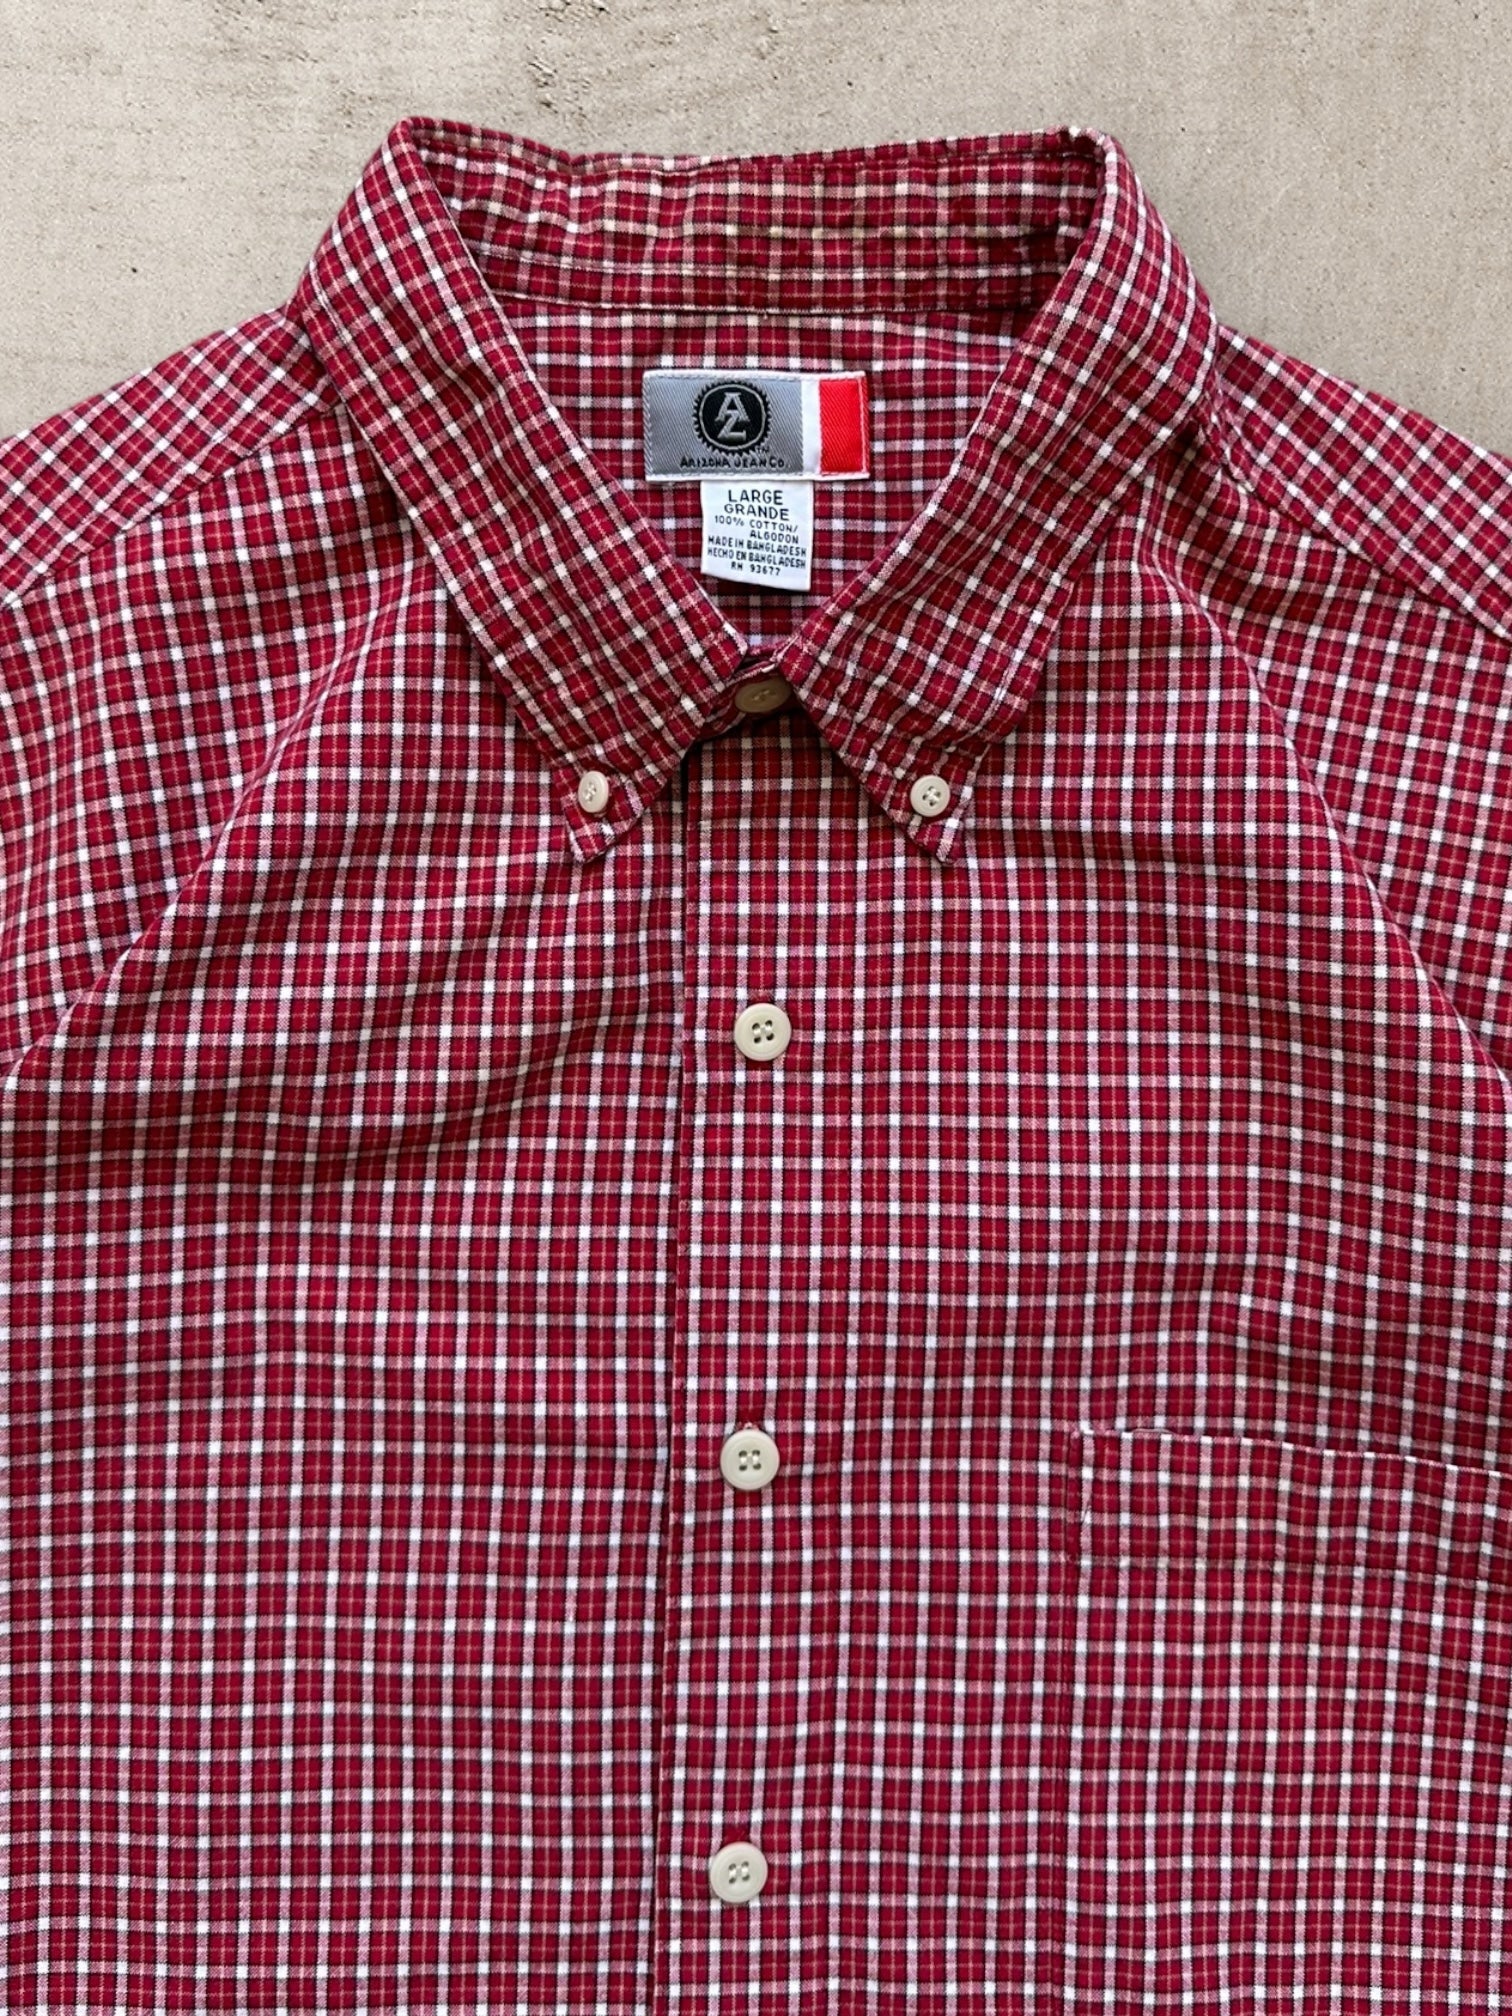 00's Arizona Jean Co. Button Up Shirt - Large